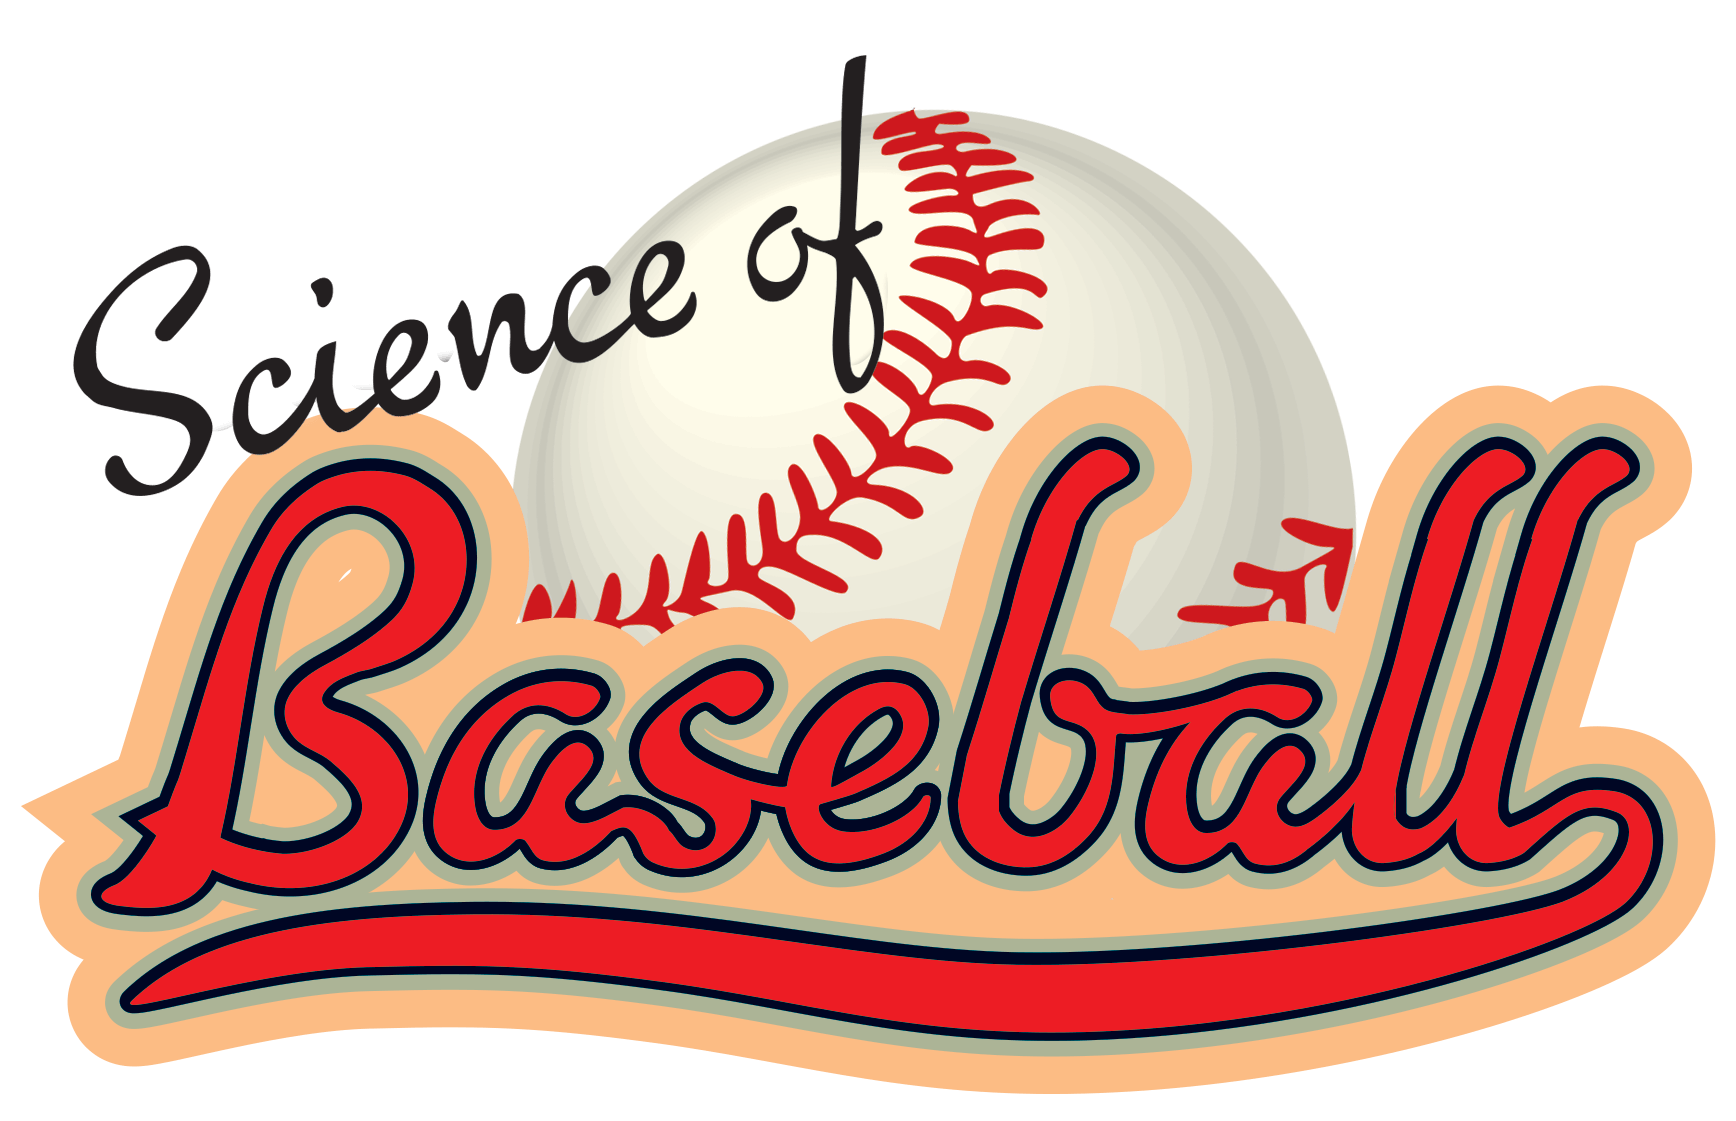 design a baseball logo online free